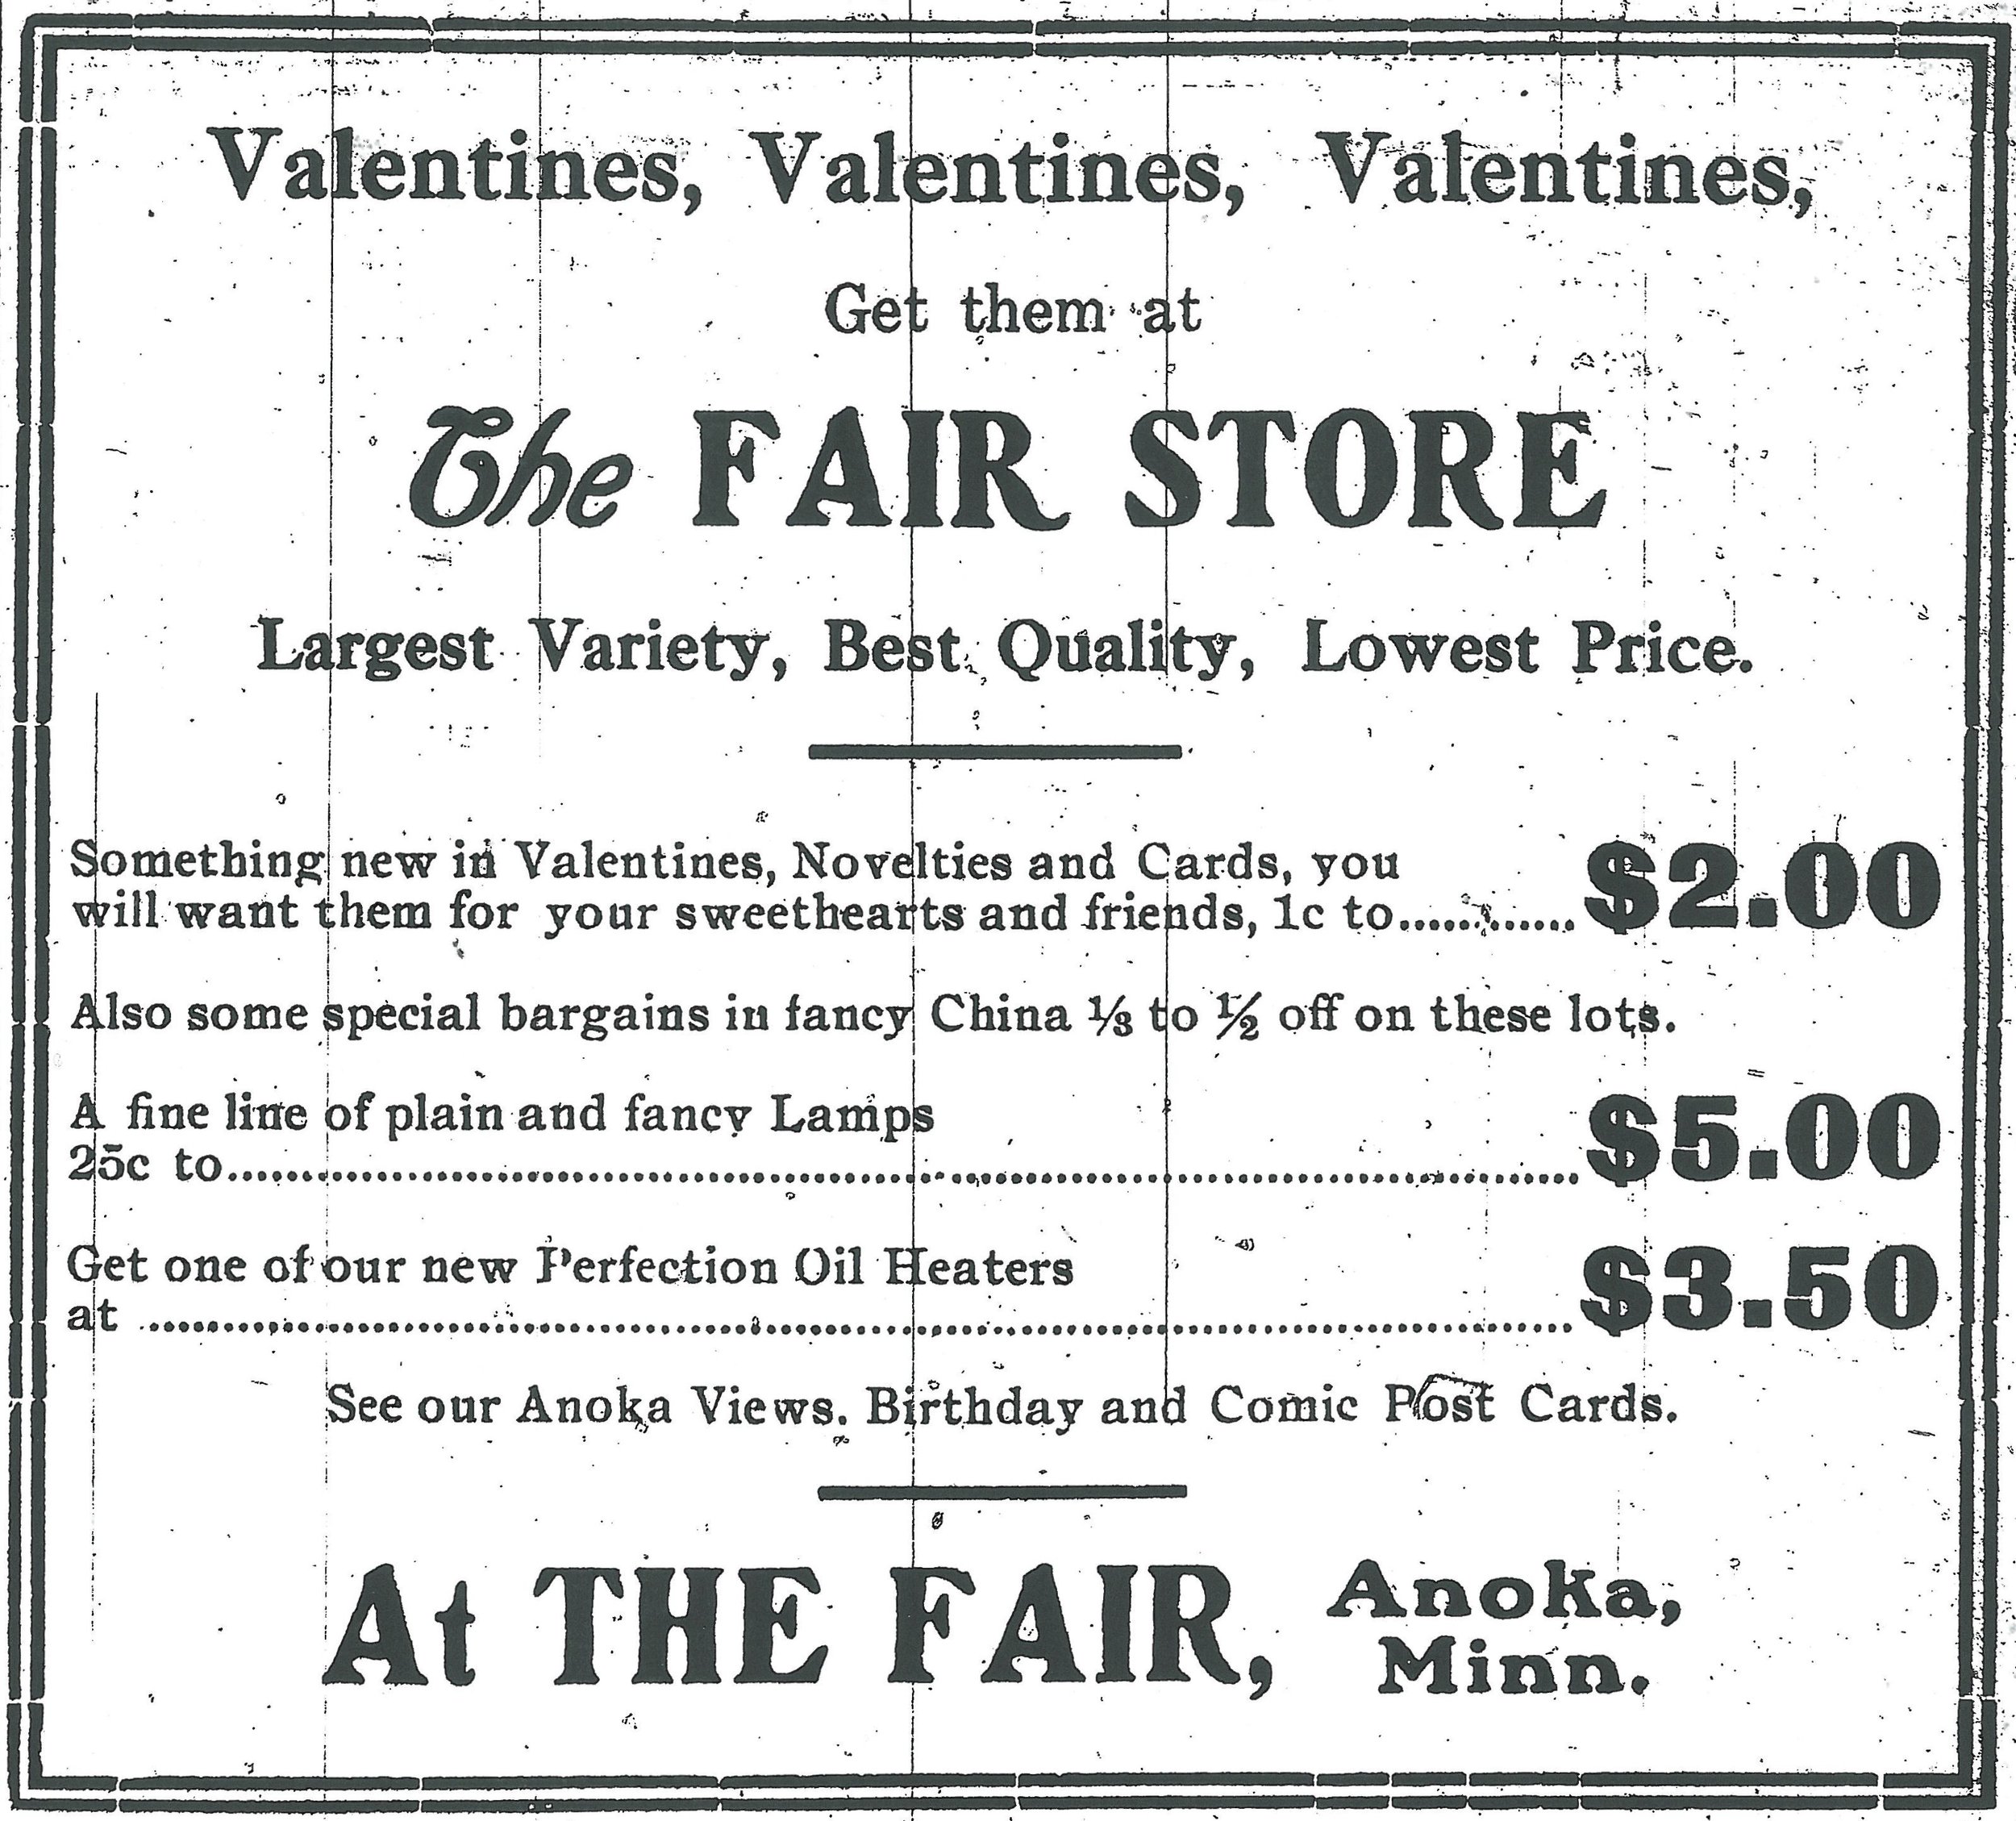 FairStoreAD_1.31.1912.jpg